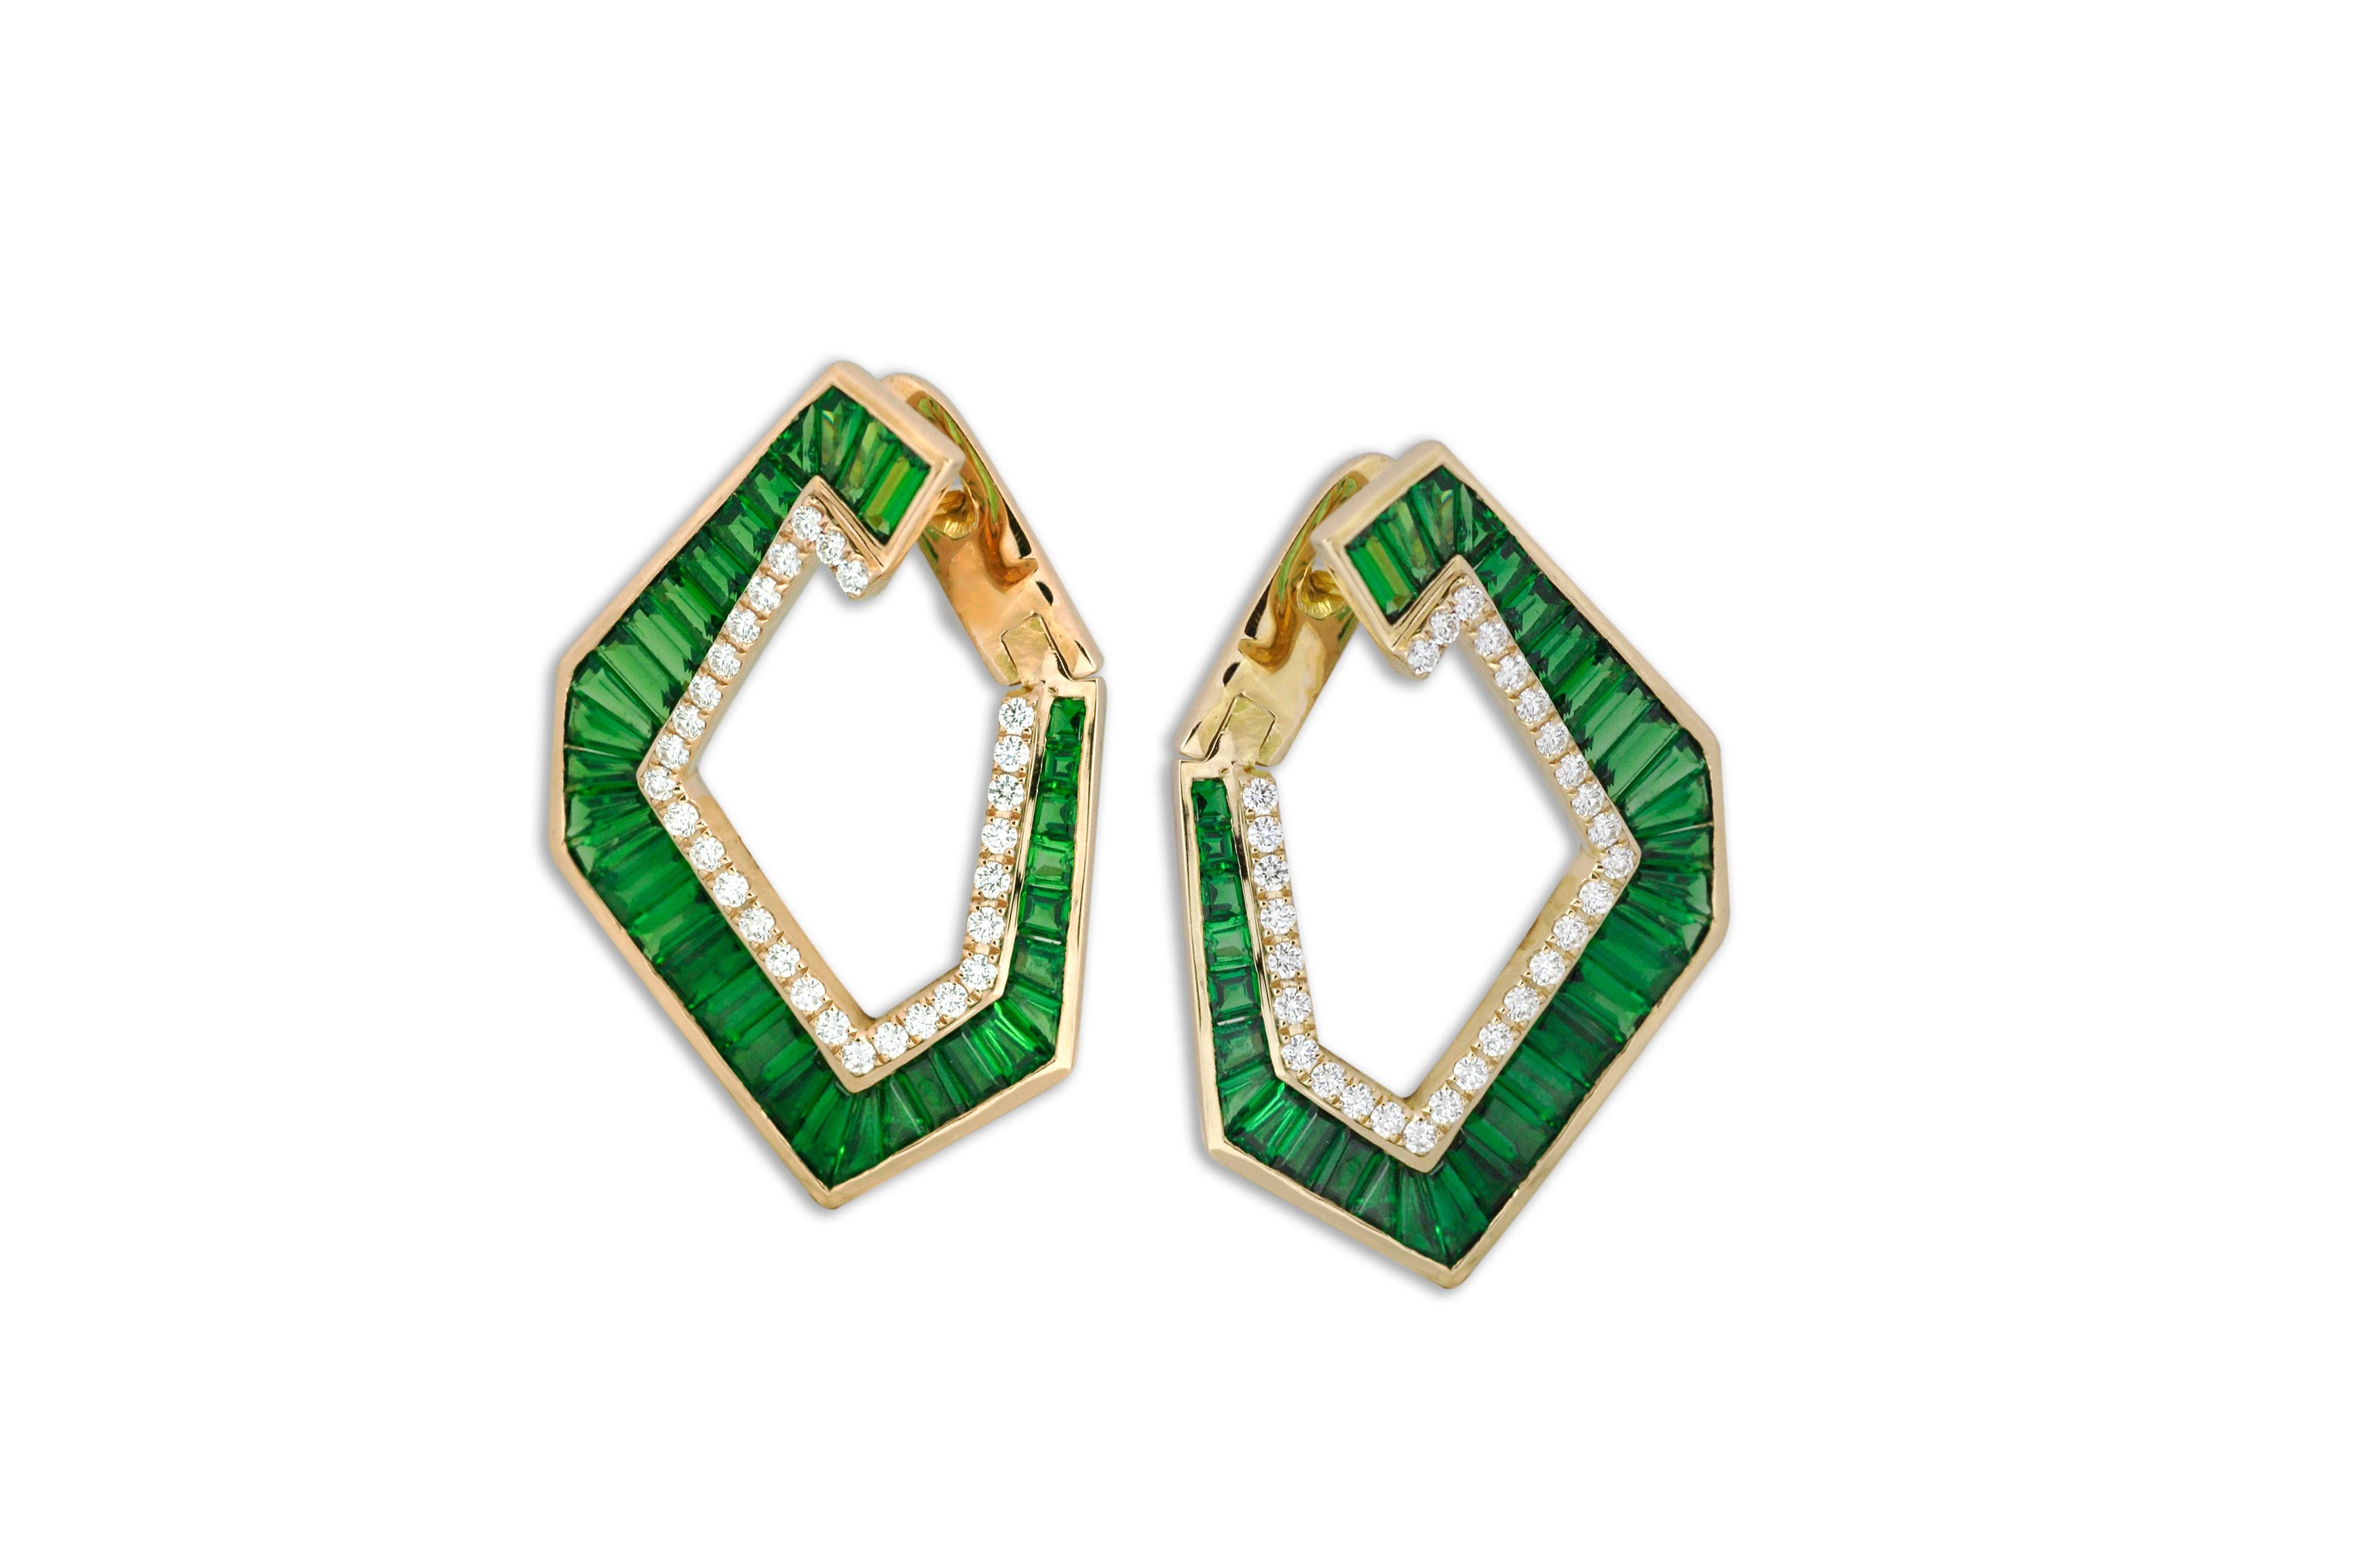 Origami Link No. 5 Tsavorite and Diamond Grande Earrings 18k Gold Settings